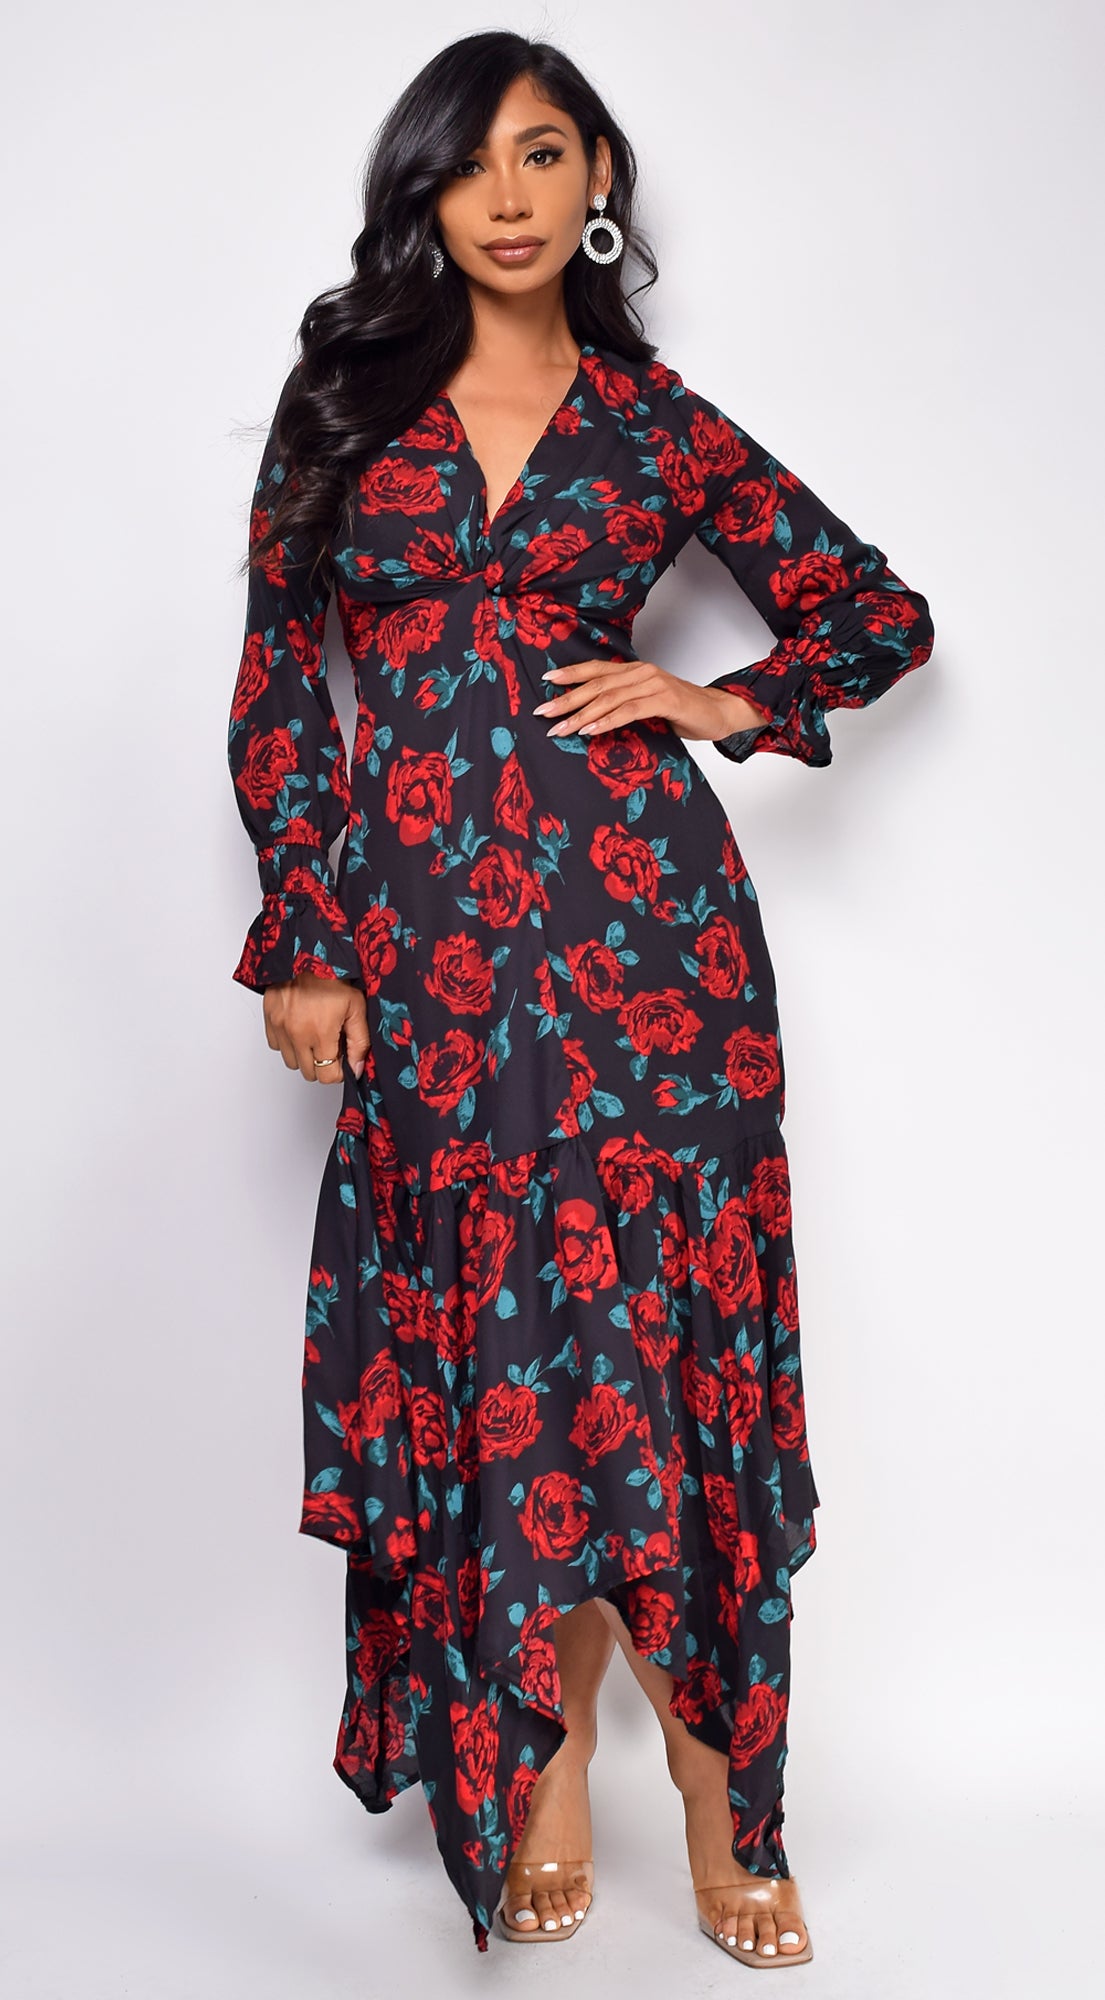 Sabela Black Floral Print Maxi Dress